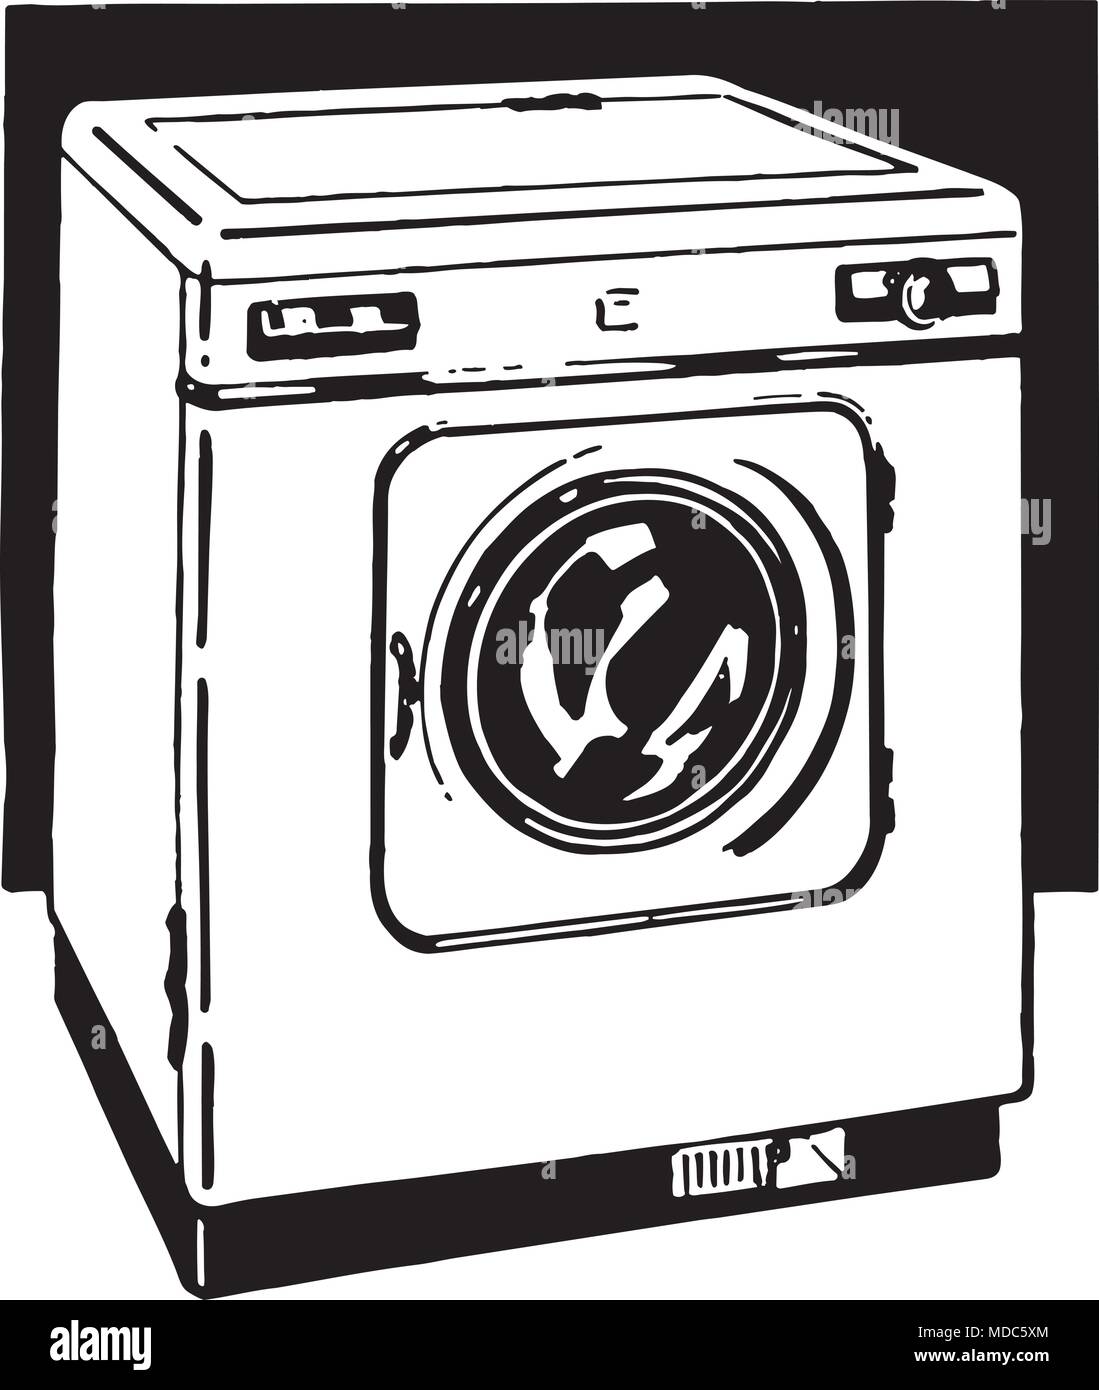 Automatic Washer - Retro Ad Art Illustration Stock Vector